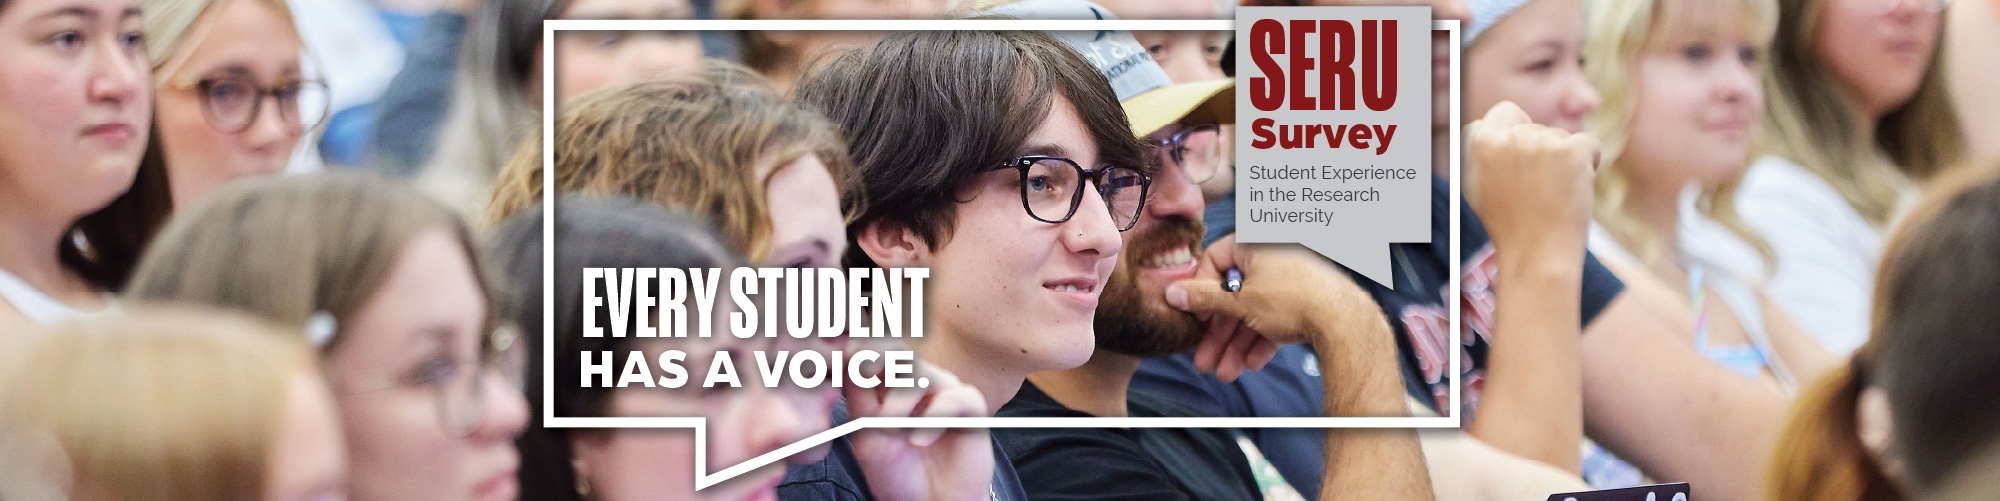 Every student has a voice. ou.edu/seru. SERU Survey, Student Experience in the Research University.